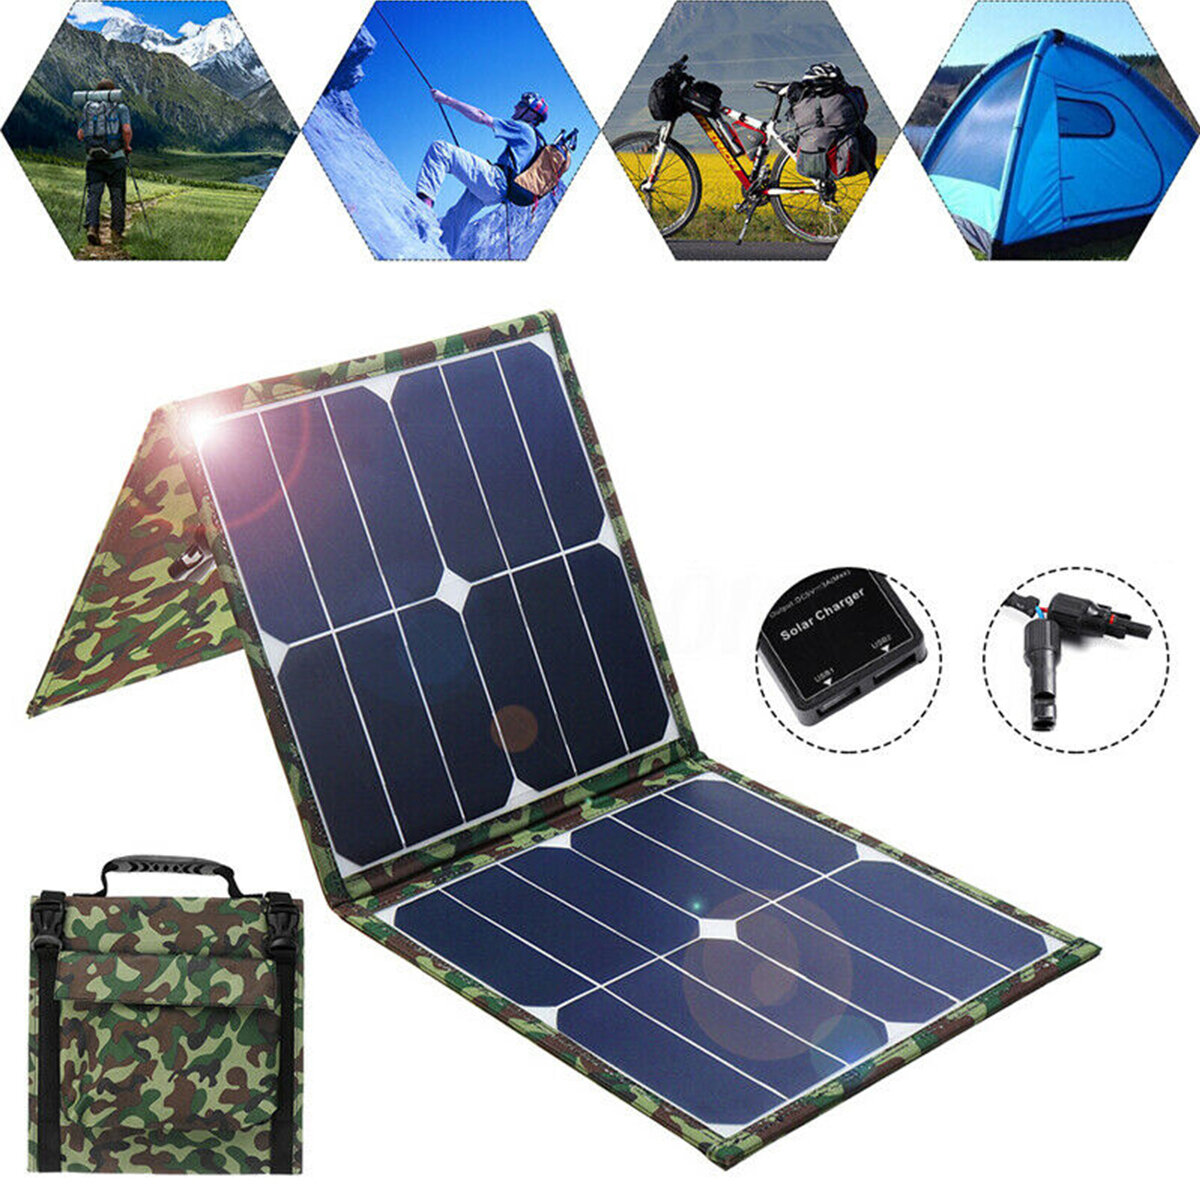 5V 60W plegable Solar Panel de carga Impermeable Alfombrilla eléctrica al aire libre cámping Viaje Solar Banco de energía